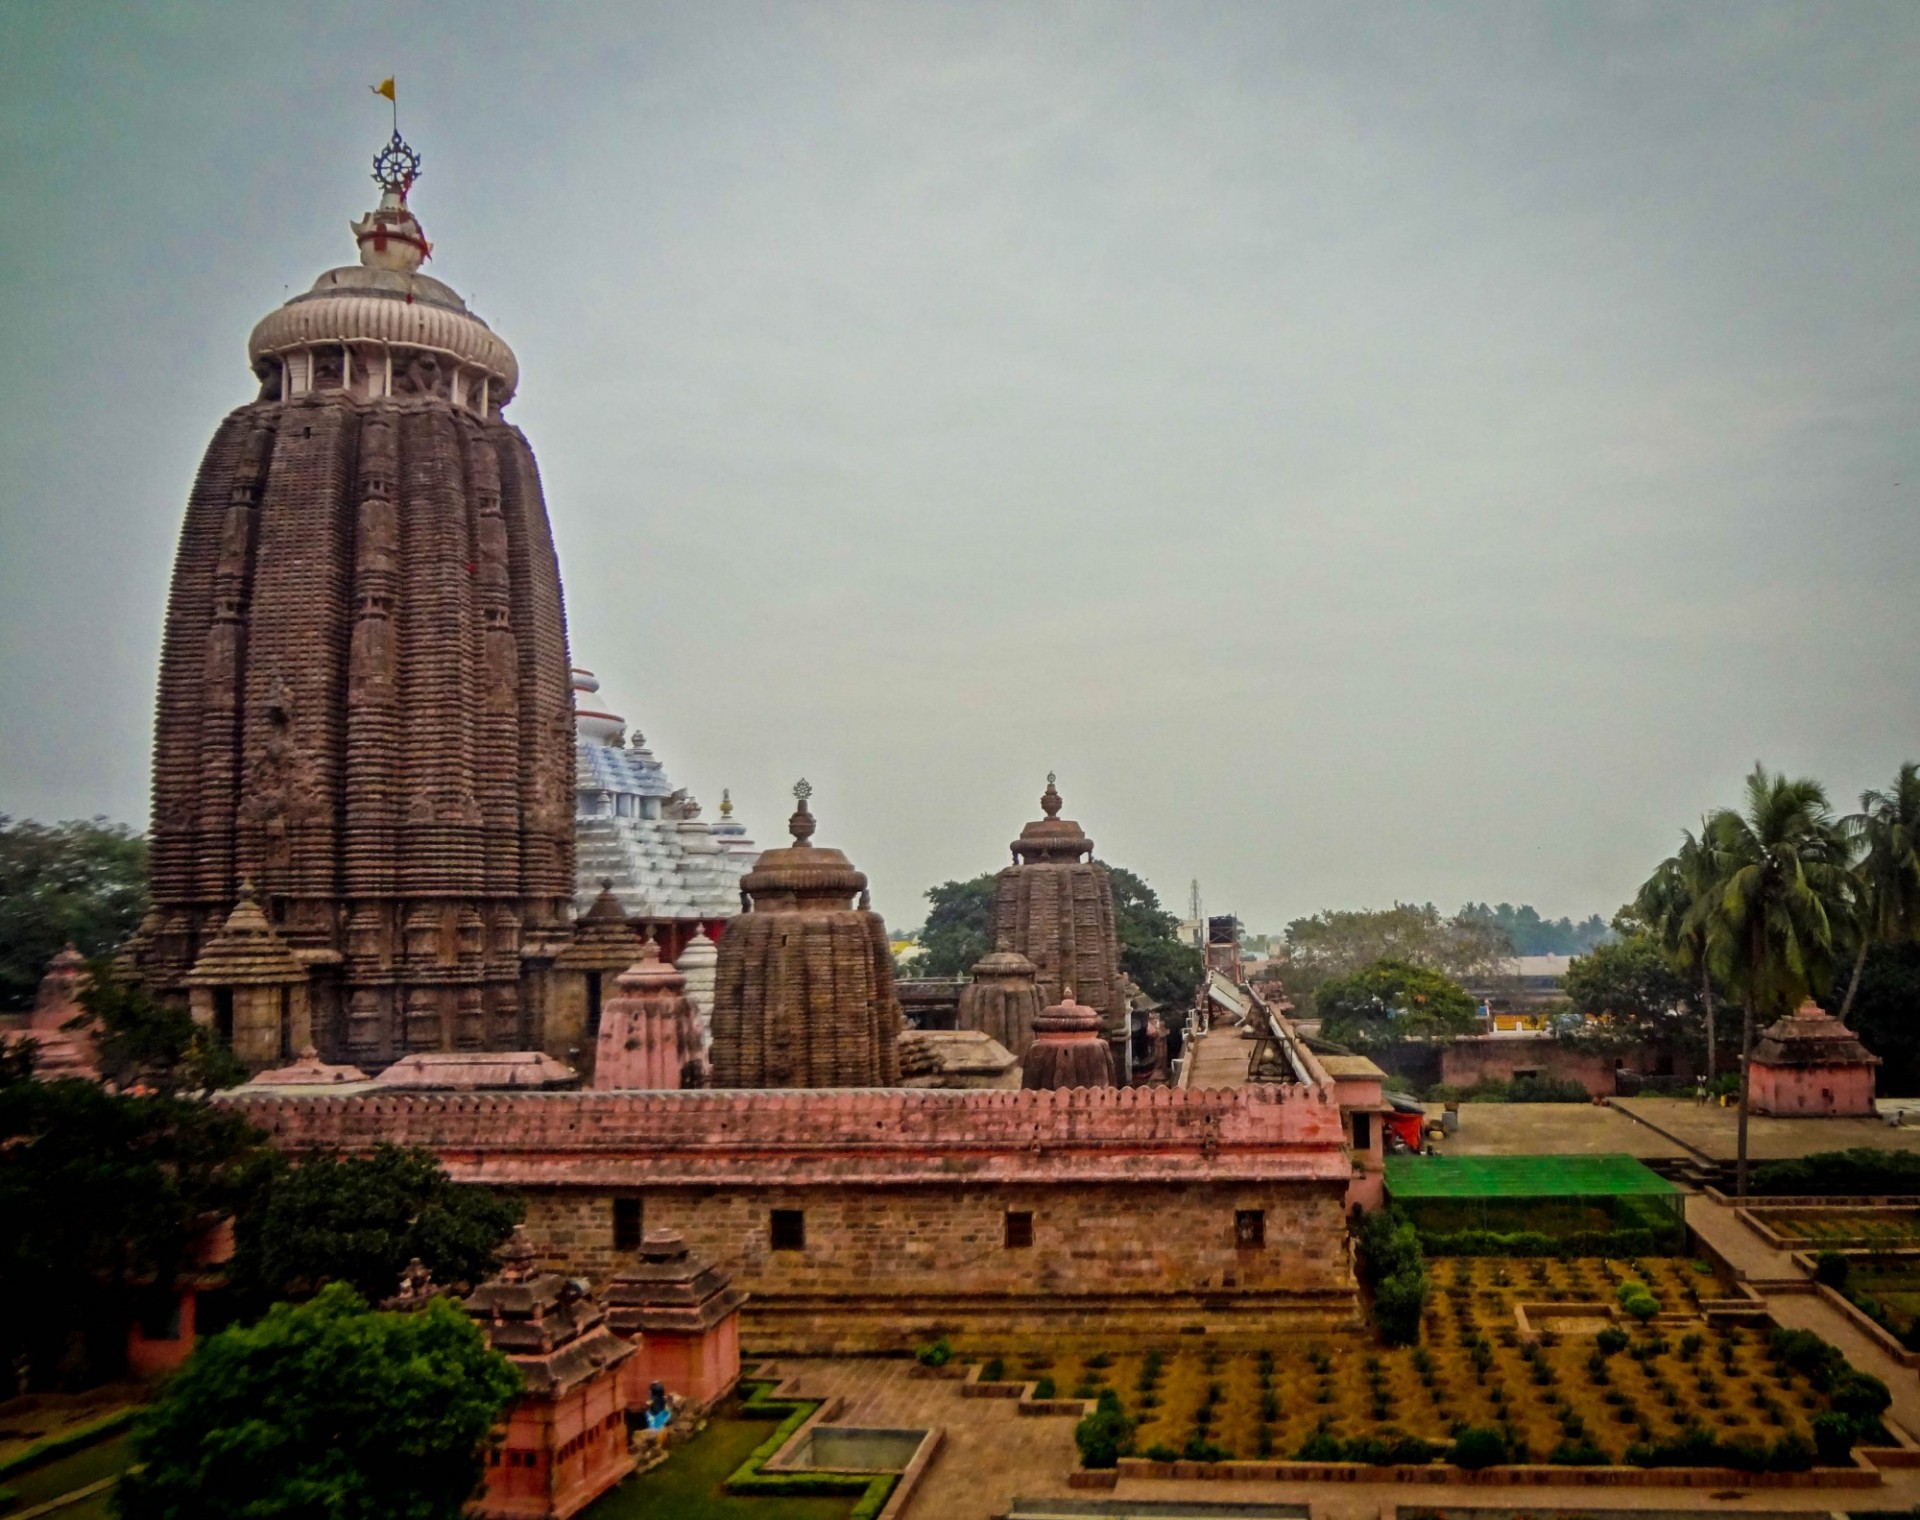 The Jagannath Temple at Puri, in the state of Odisha. Source: Abhishek Barua, on Wikimedia Commons. CC BY-SA 3.0.